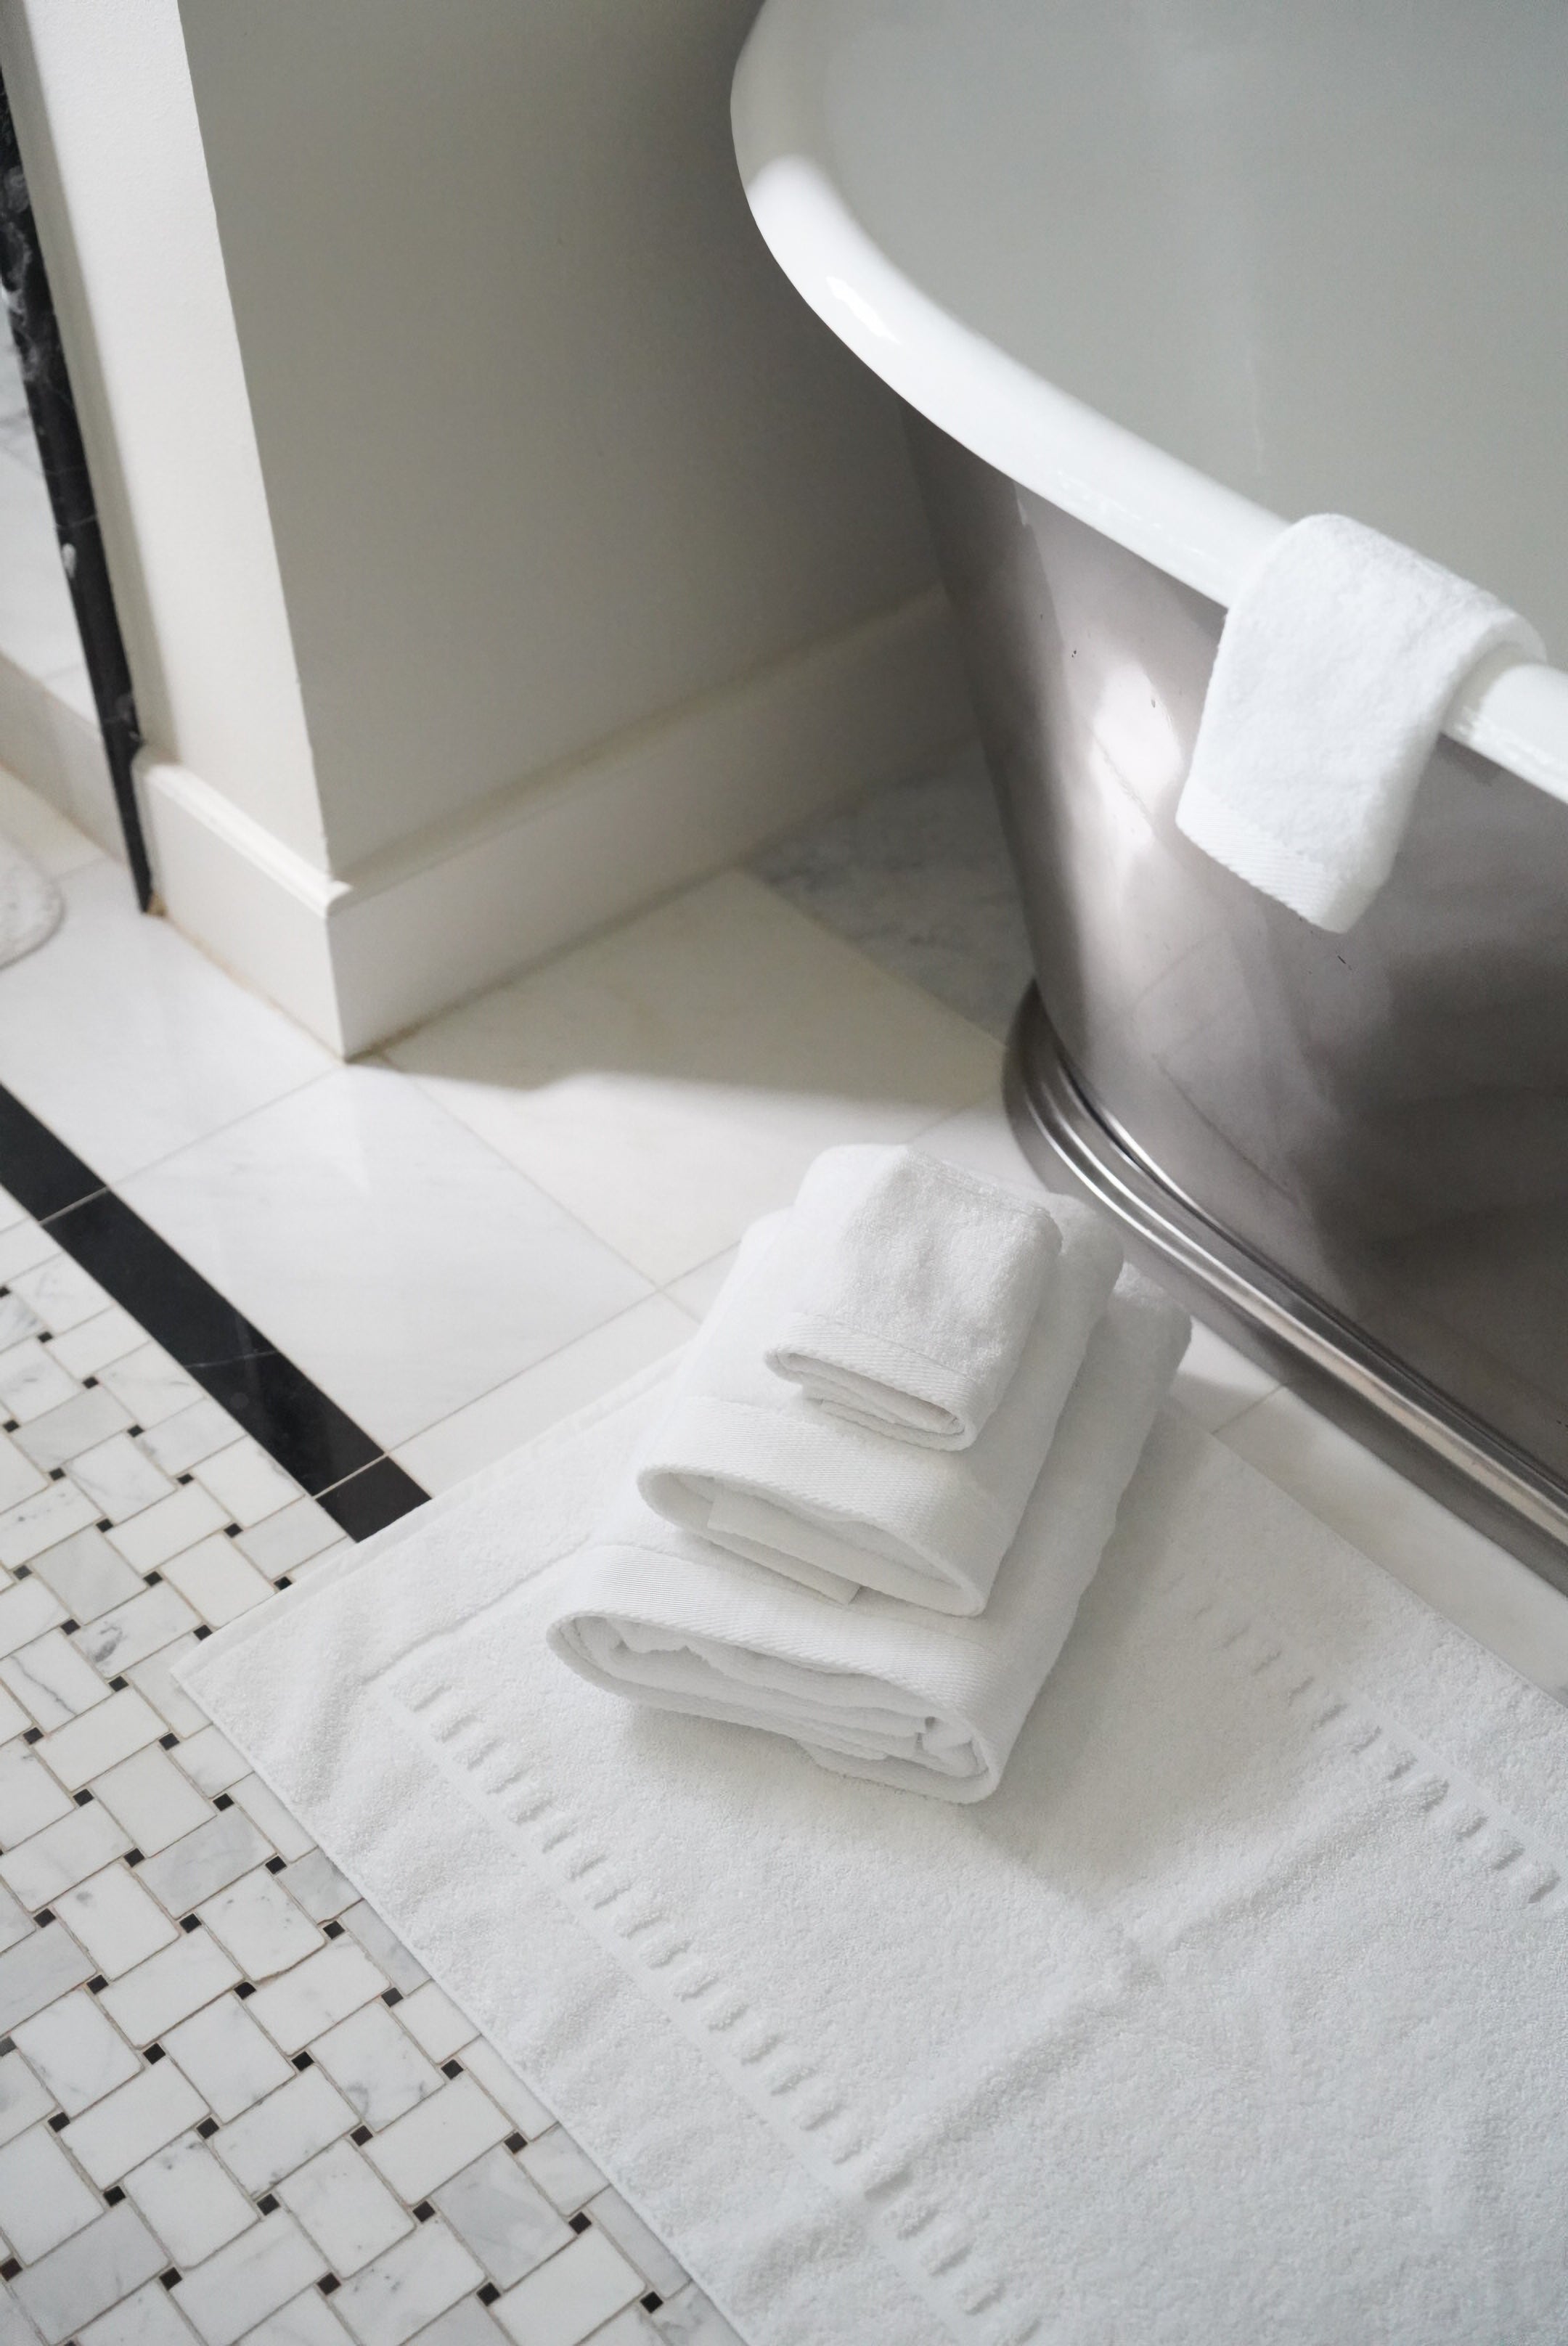 Caption: Bath Mat and the 3-Piece Towel Set.